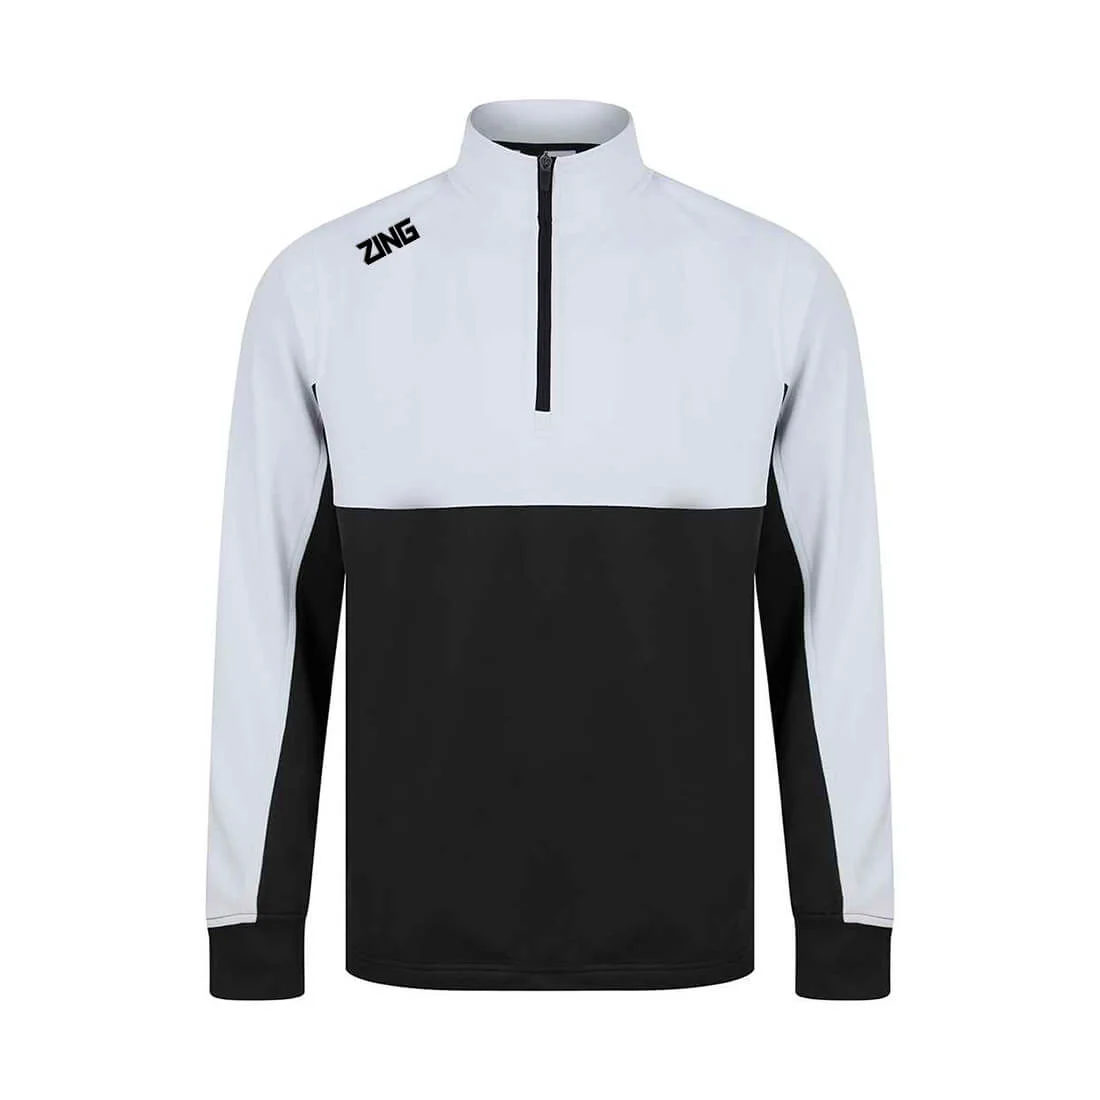 ZING Sportswear Match Zip Midlayer | Training Kit and Teamwear - Black White Front